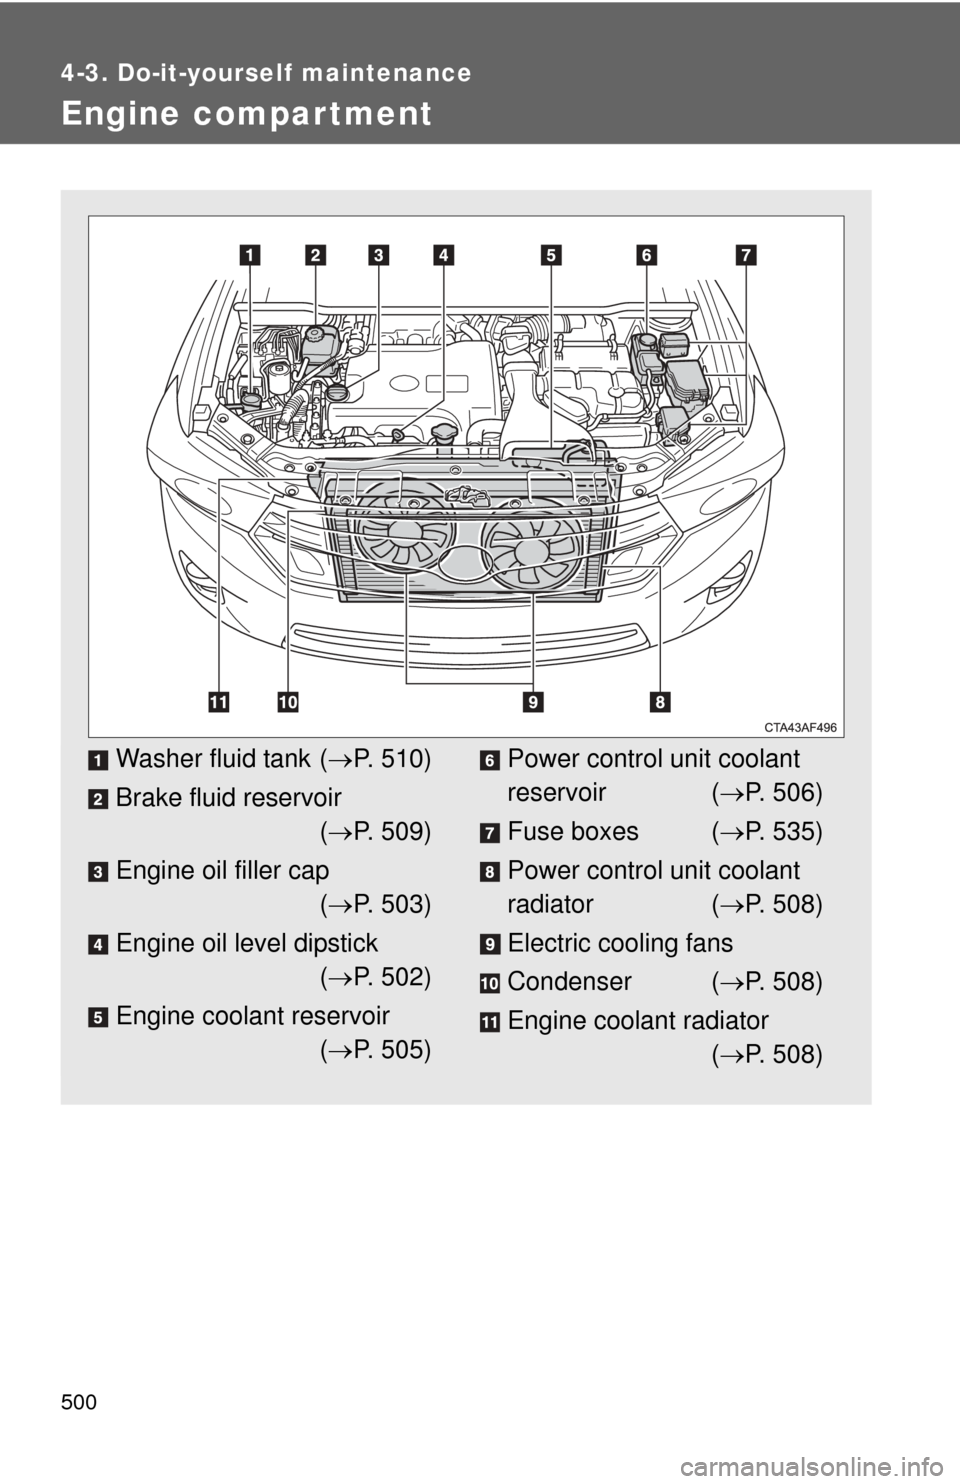 TOYOTA HIGHLANDER HYBRID 2013 XU50 / 3.G Owners Manual 500
4-3. Do-it-yourself maintenance
Engine compar tment
Washer fluid tank (P. 510)
Brake fluid reservoir ( P. 509)
Engine oil filler cap ( P. 503)
Engine oil level dipstick ( P. 502)
Engin